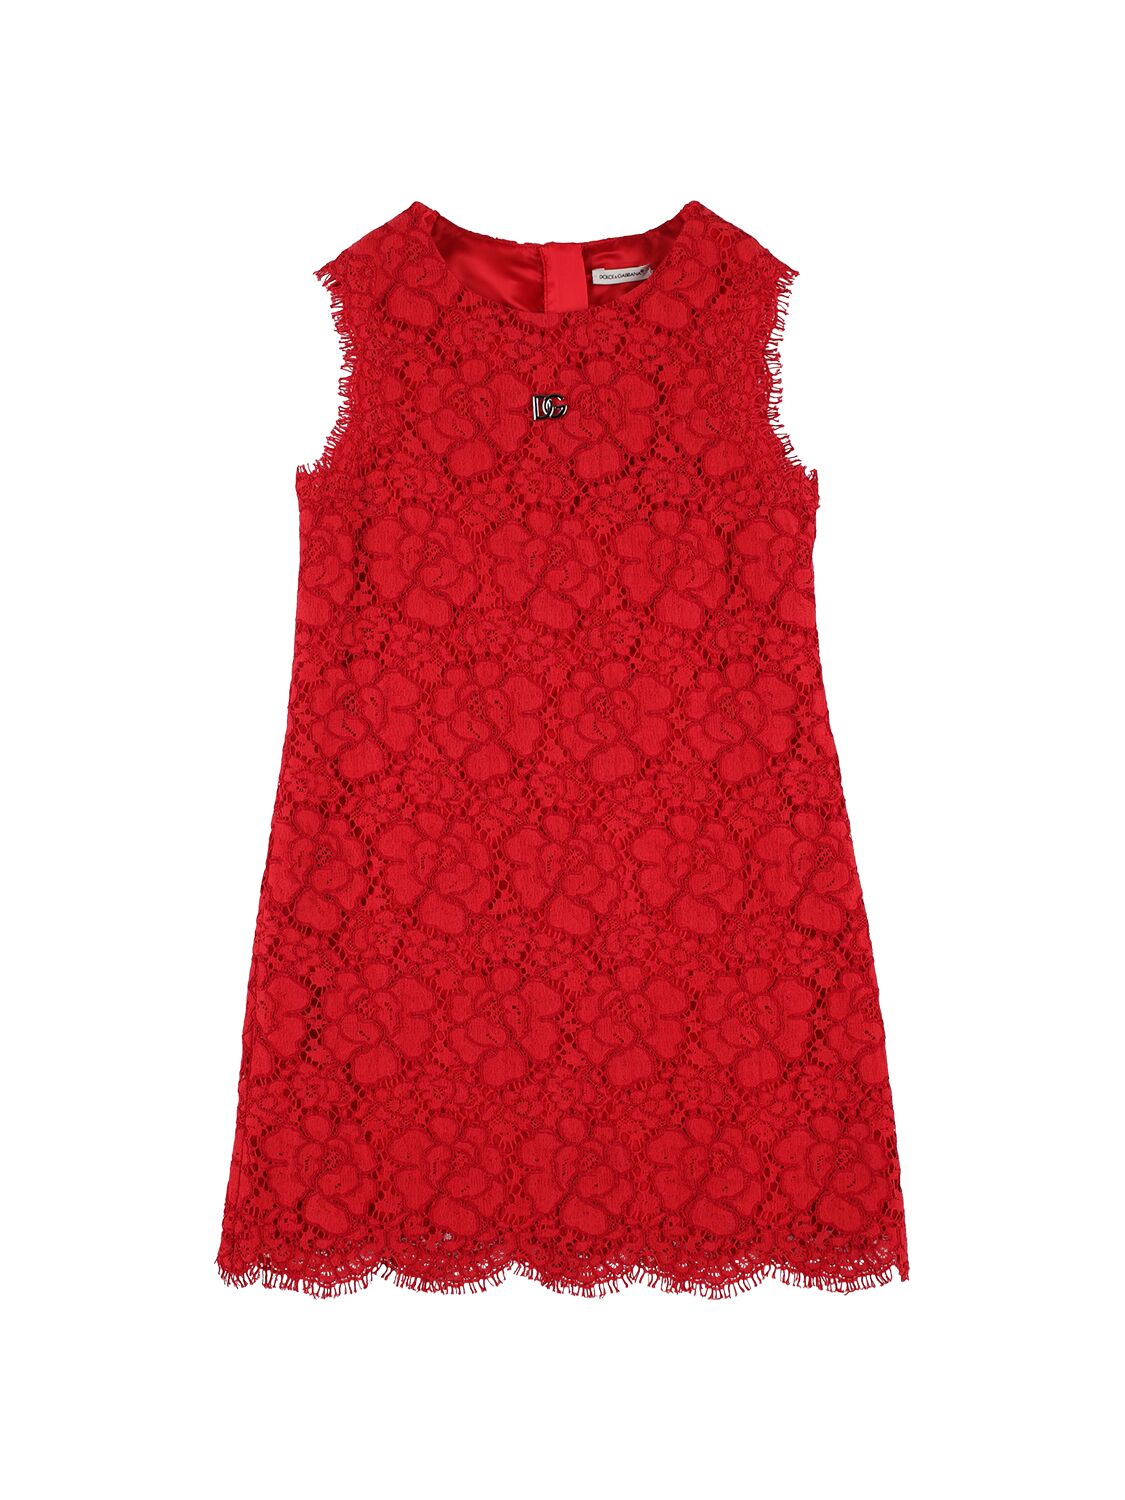 Dolce & Gabbana Teen Girls Red Lace Dress